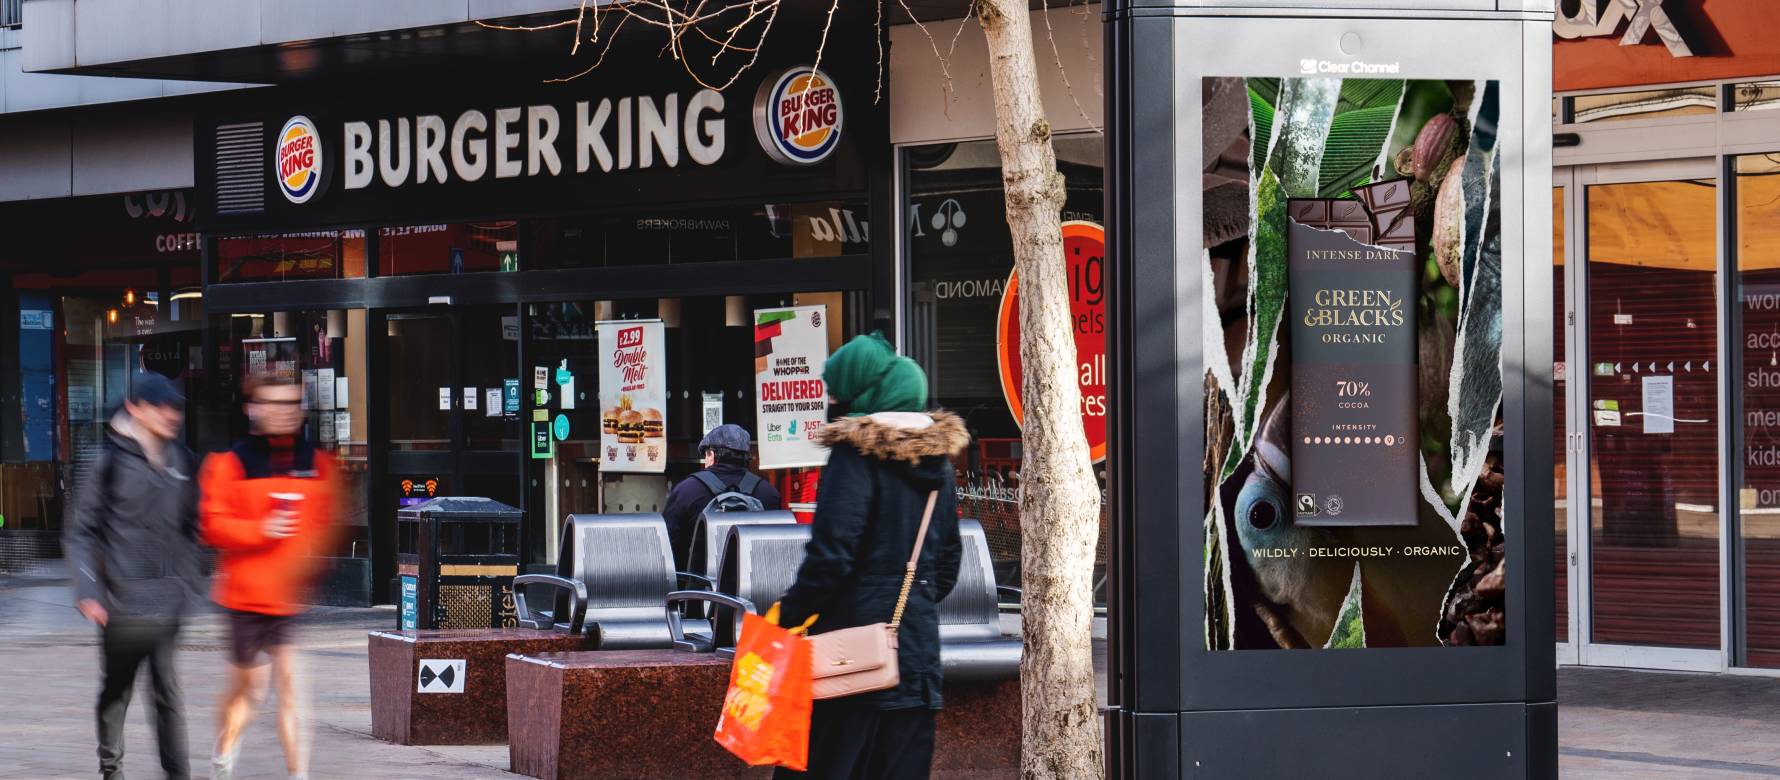 Digital screen outside Burger King showing Advert for Green & Black's